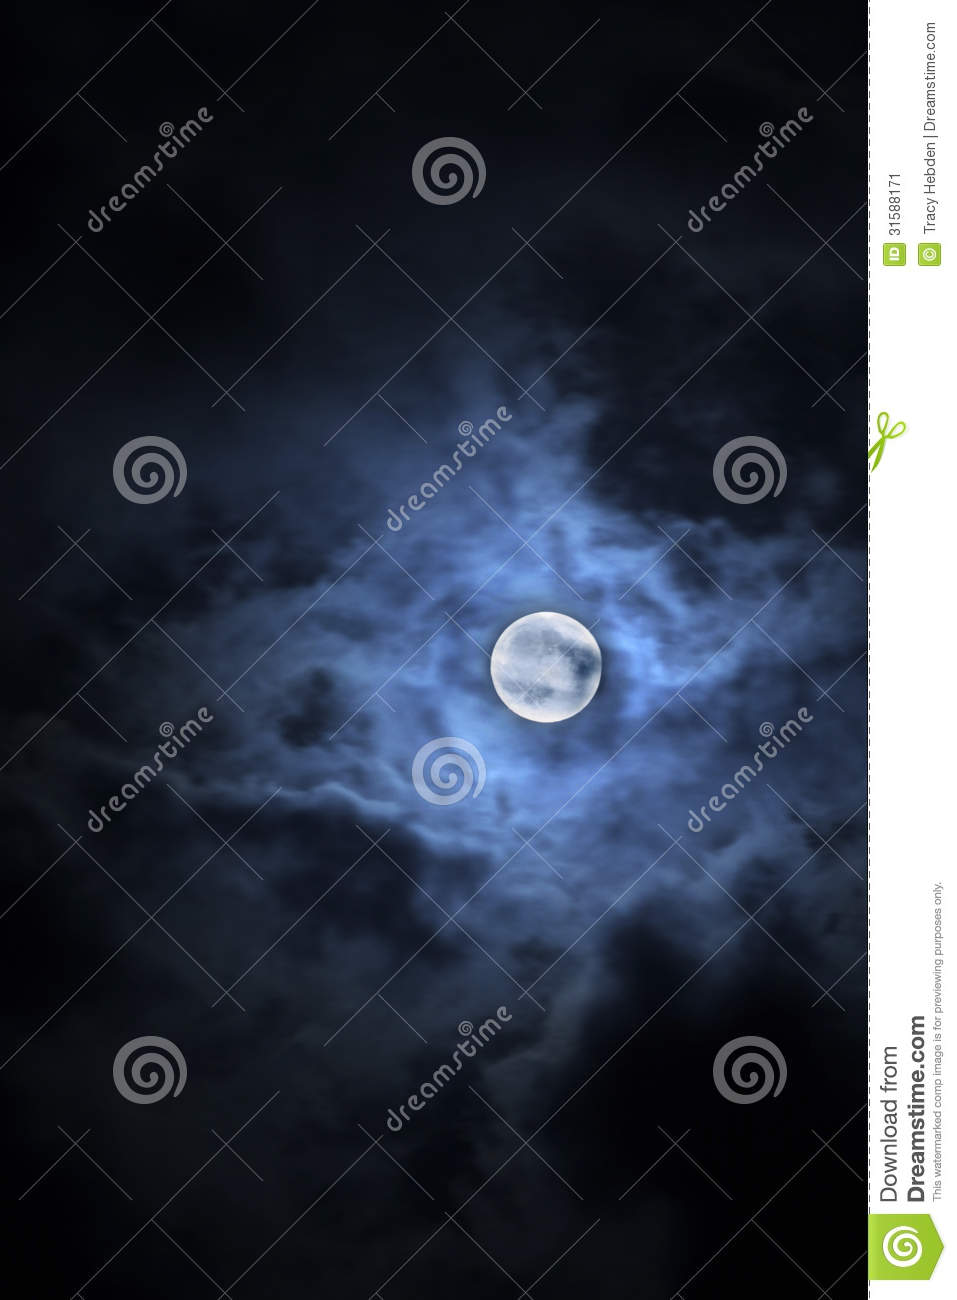 Full Moon Taken On A Cloudy Night File Shows Digital Noise In Darker